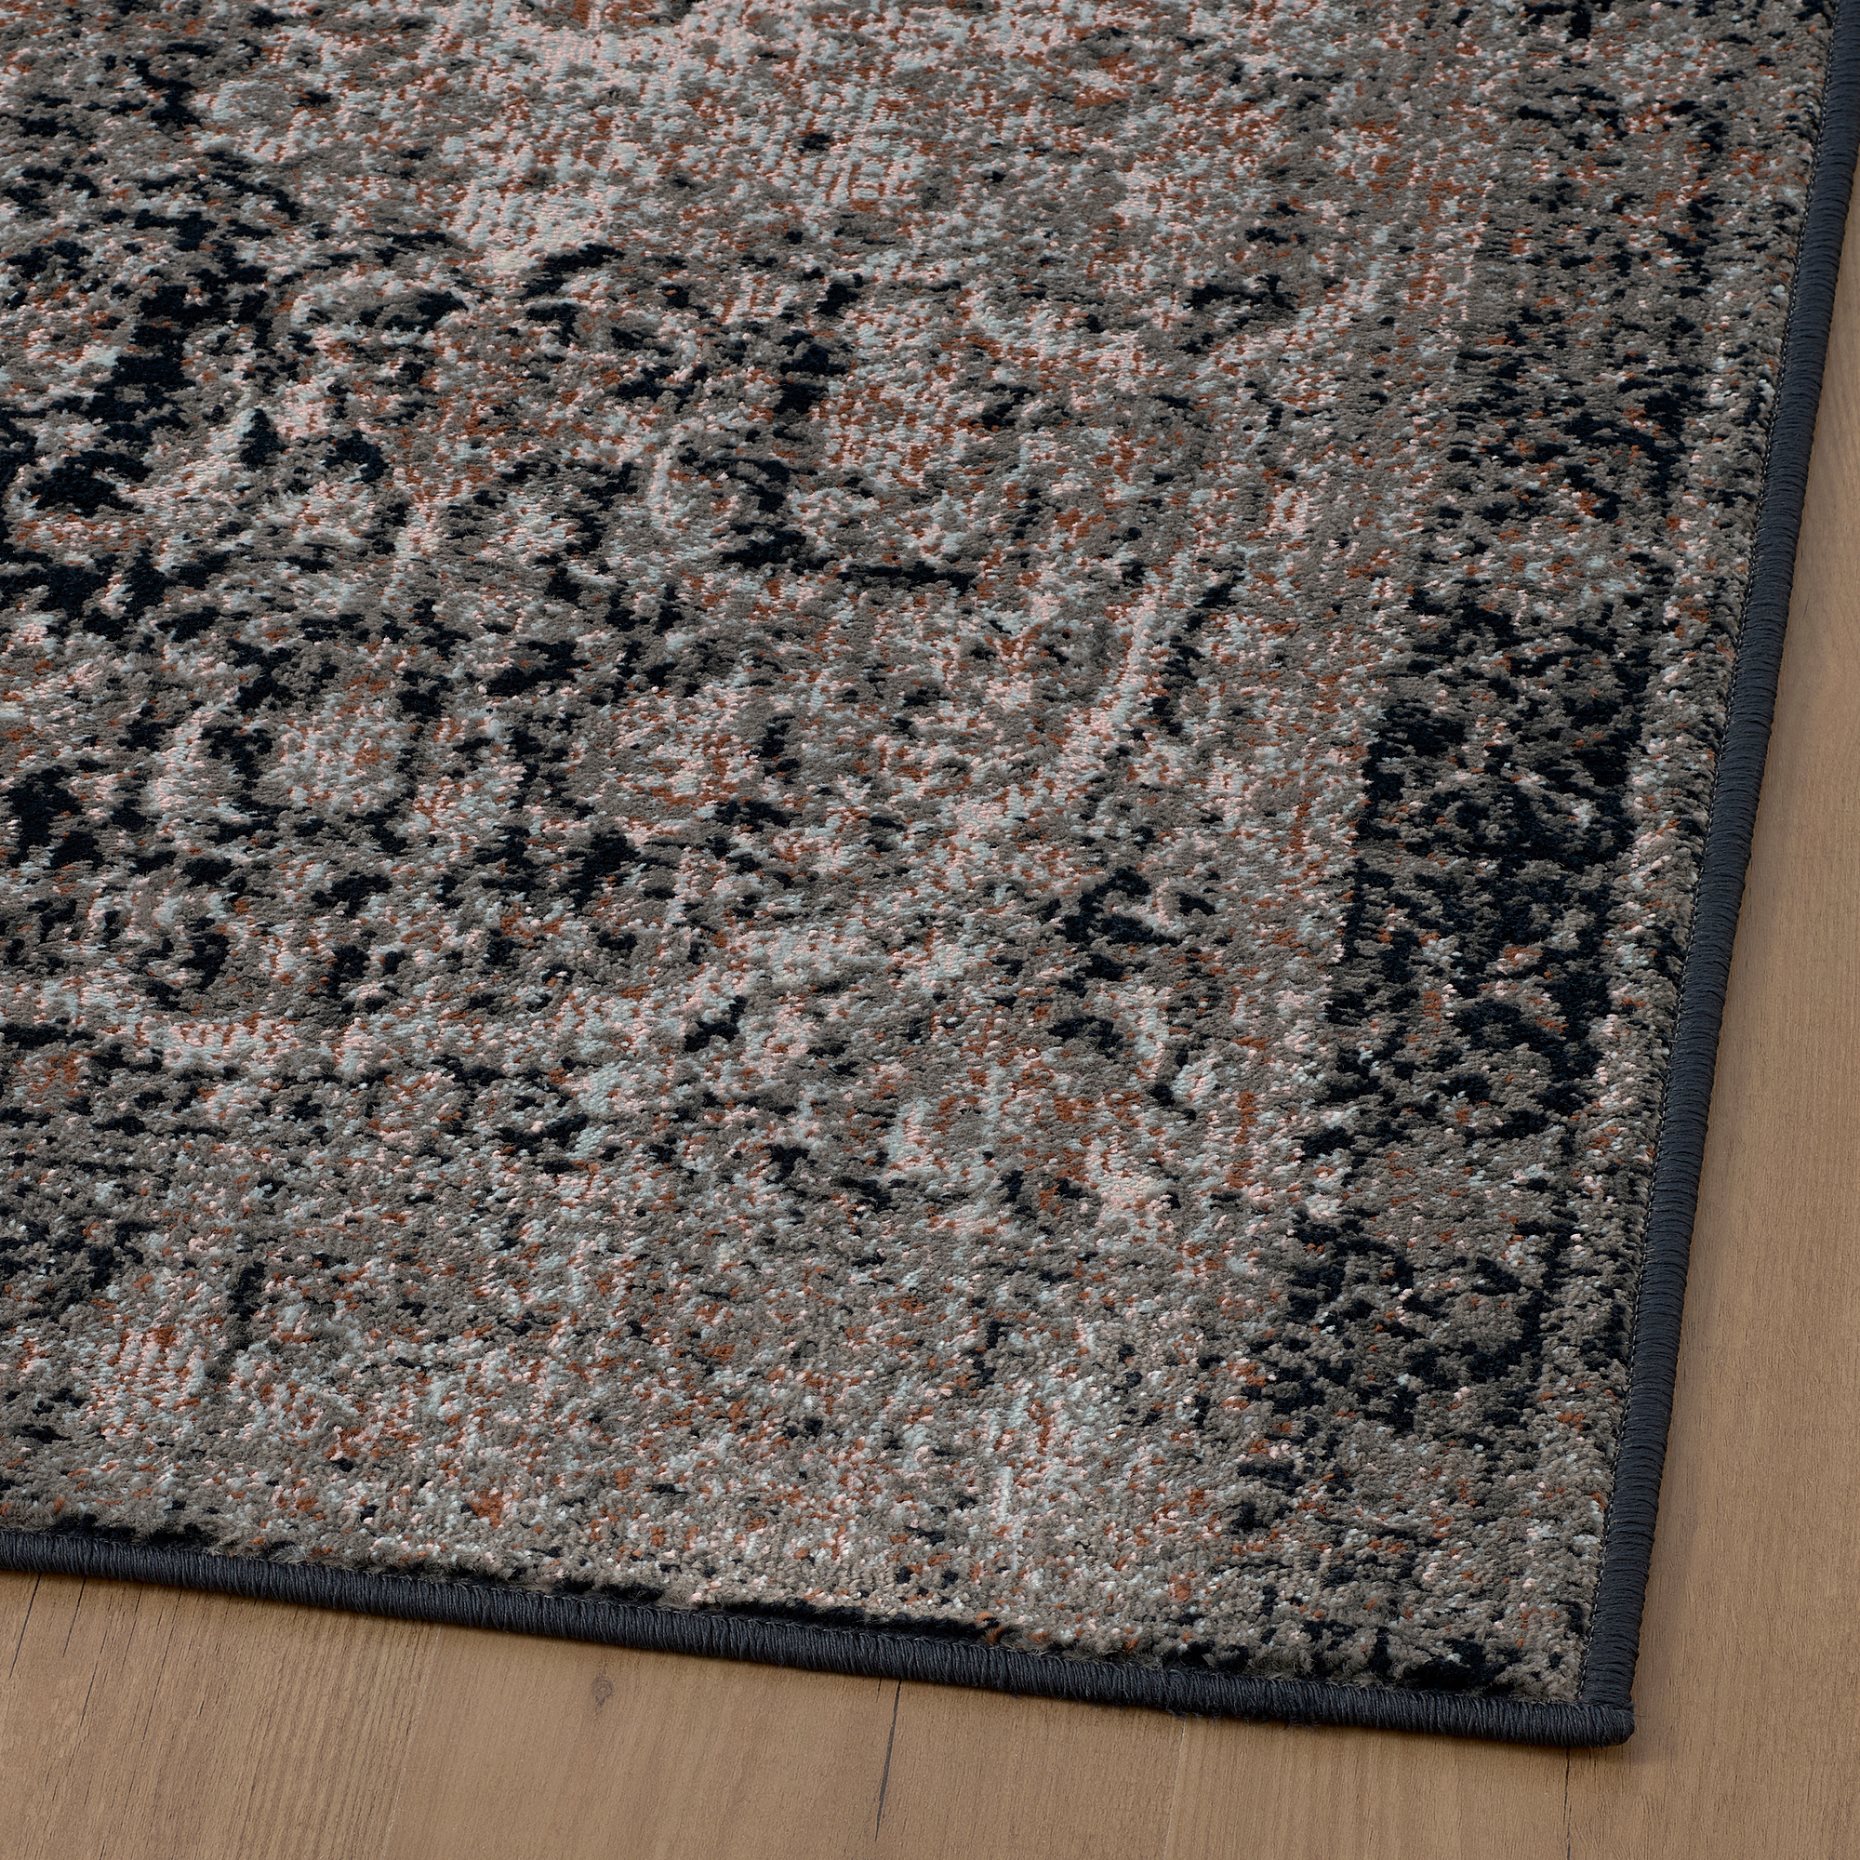 TEBSTRUP, rug low pile, 80x150 cm, 505.312.14